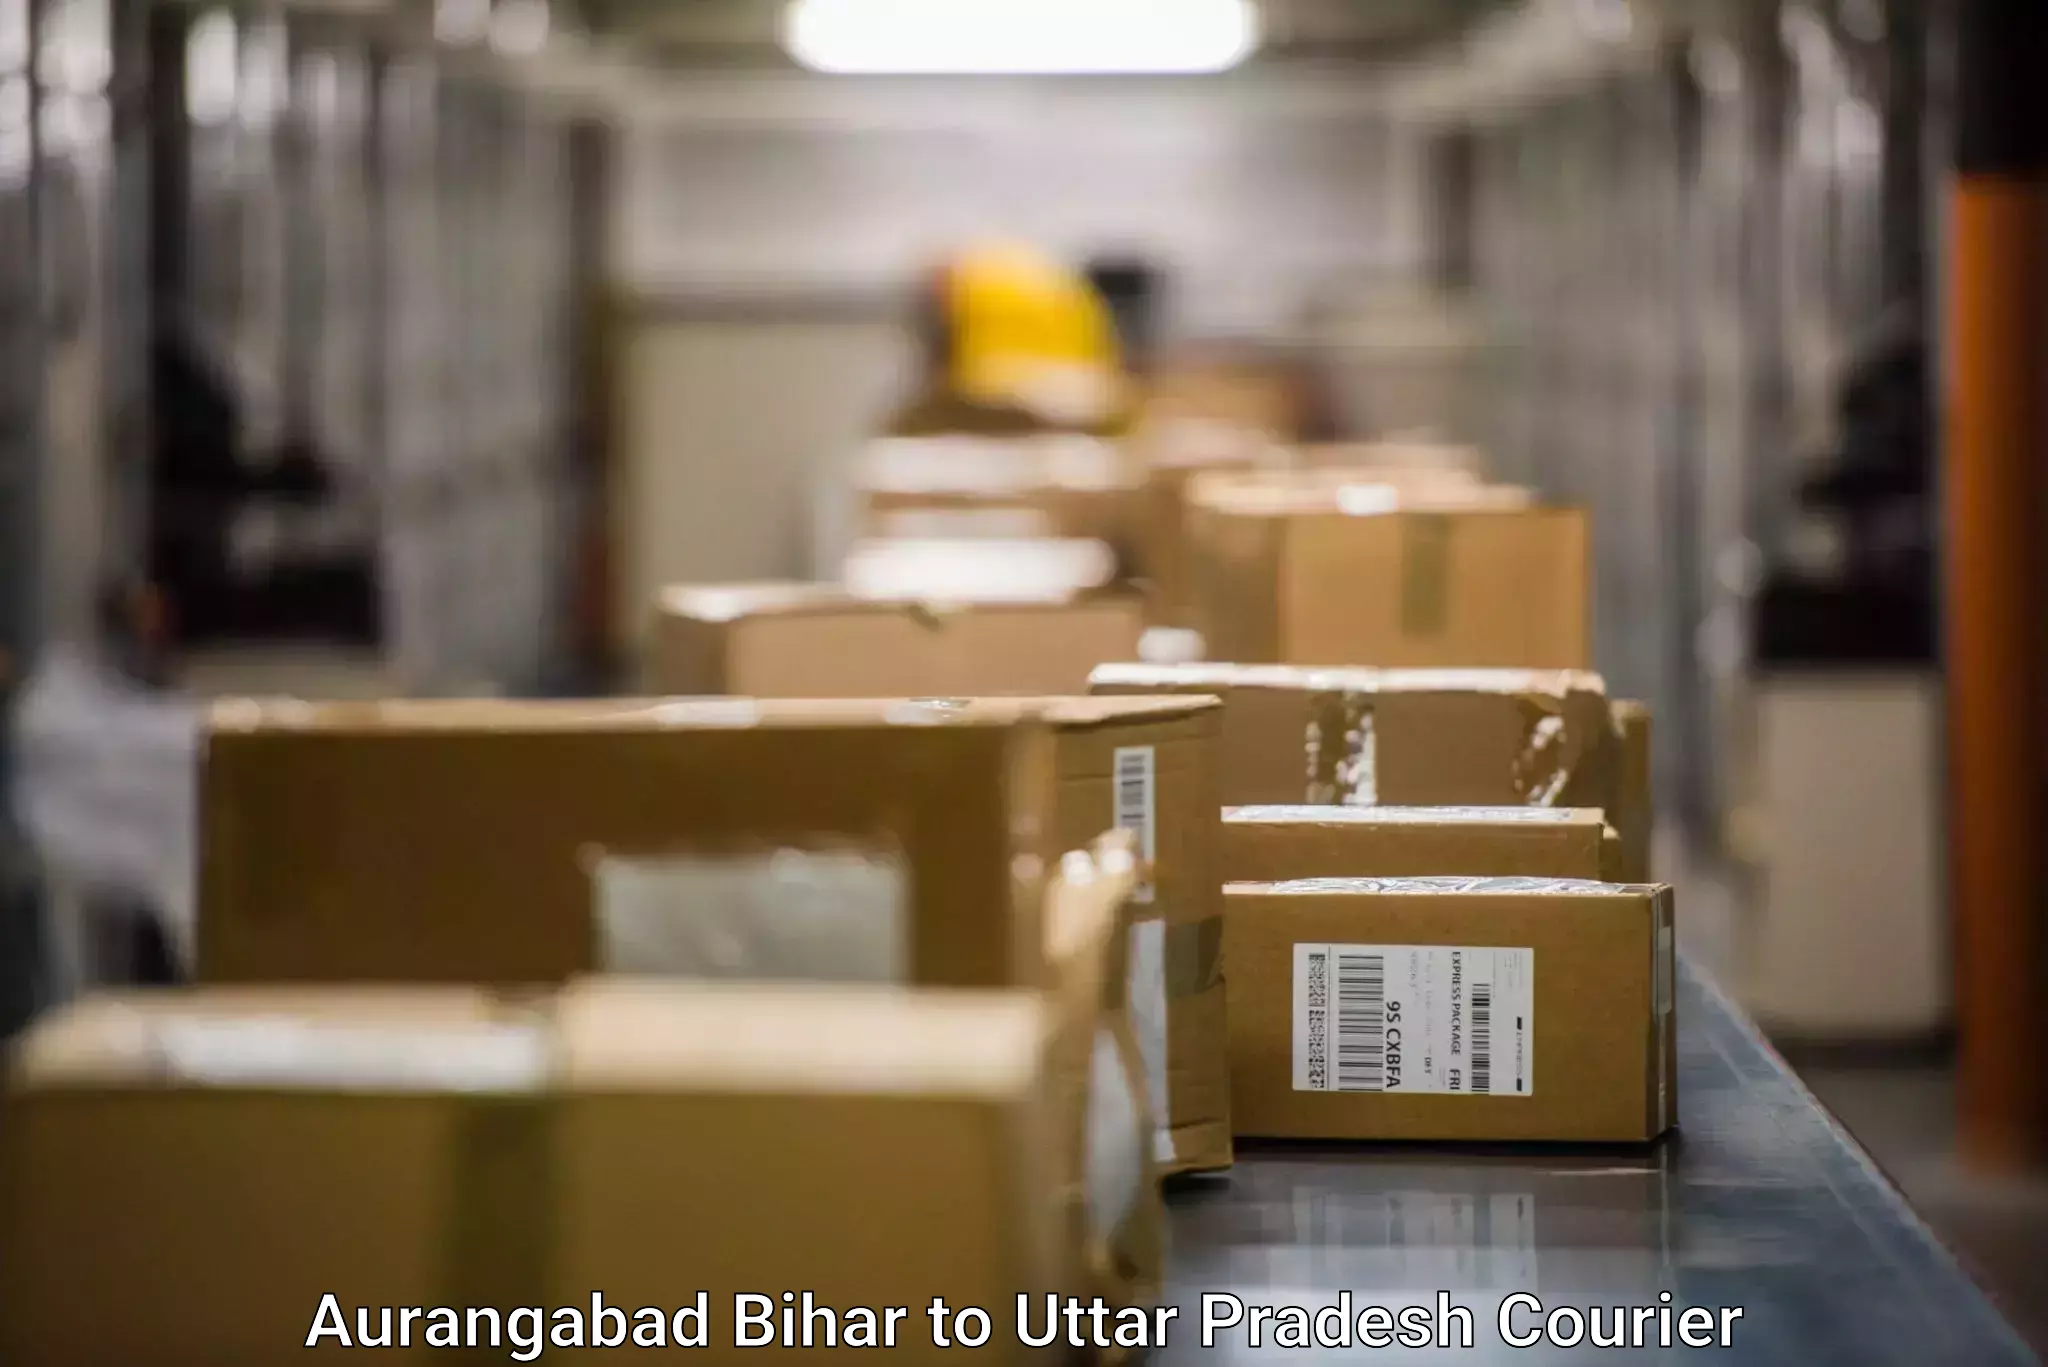 Secure freight services Aurangabad Bihar to Aligarh